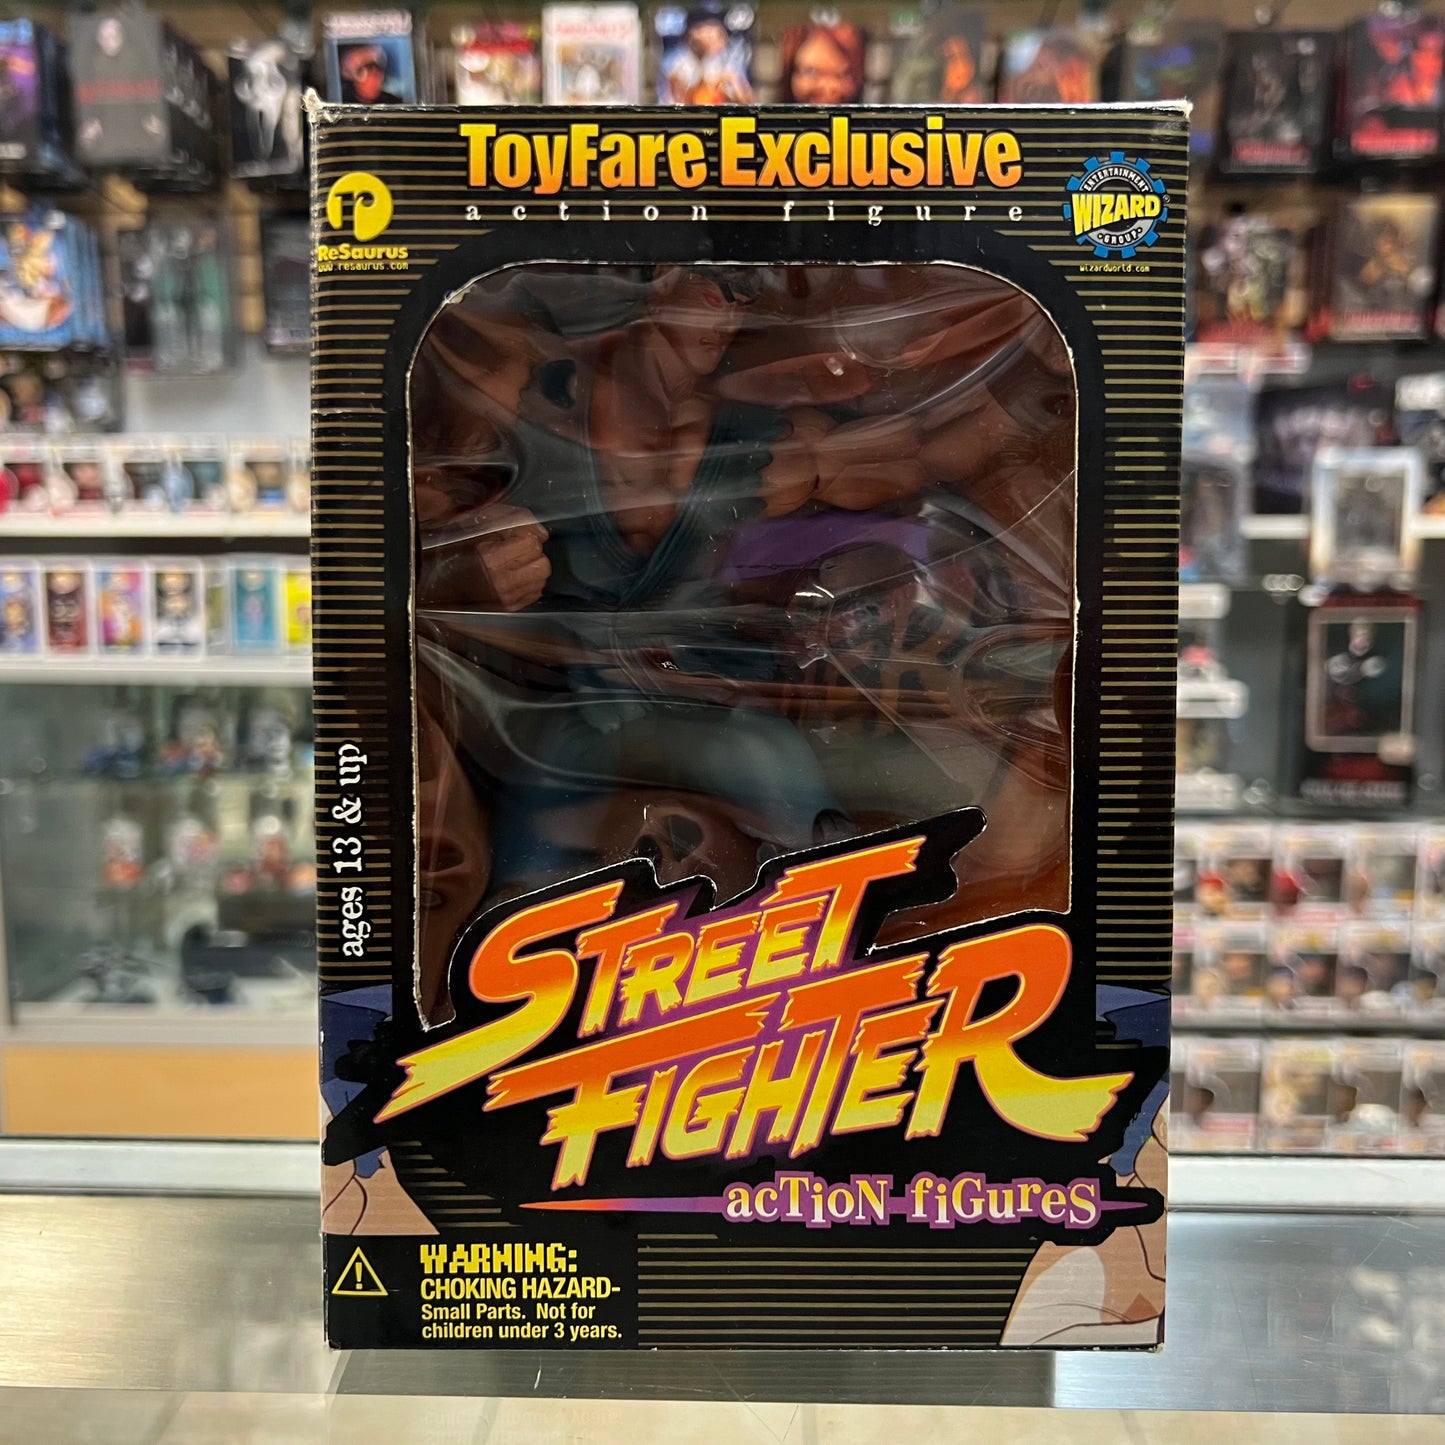 Street Fighter Toyfare Exclusive - Evil Ryu - Action Figure - Resaurus (Wizard World) - 1999